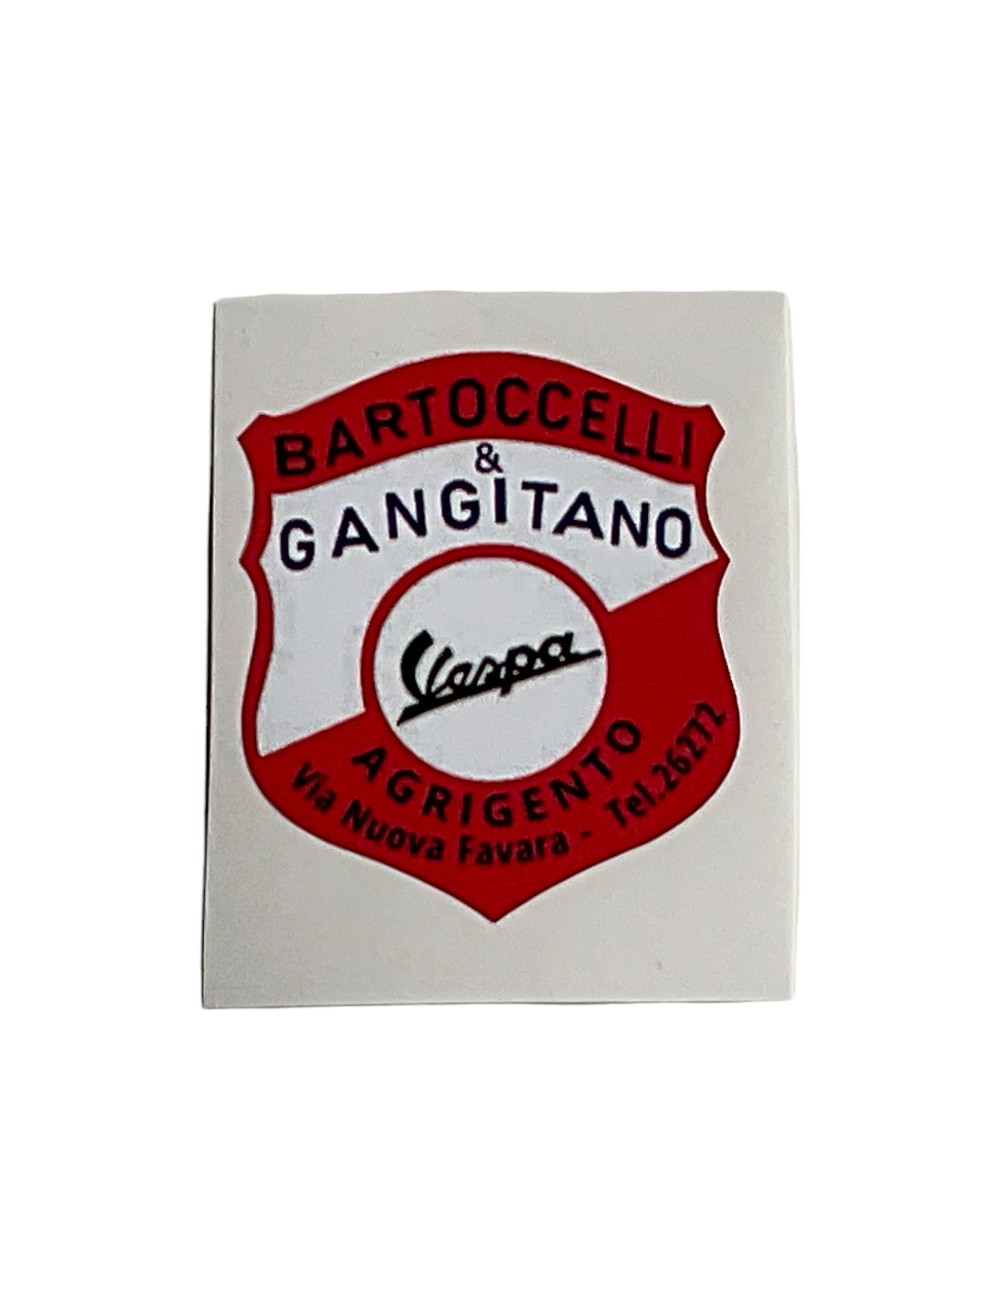 Adesivo concessionario Bartoccelli & Gangitano